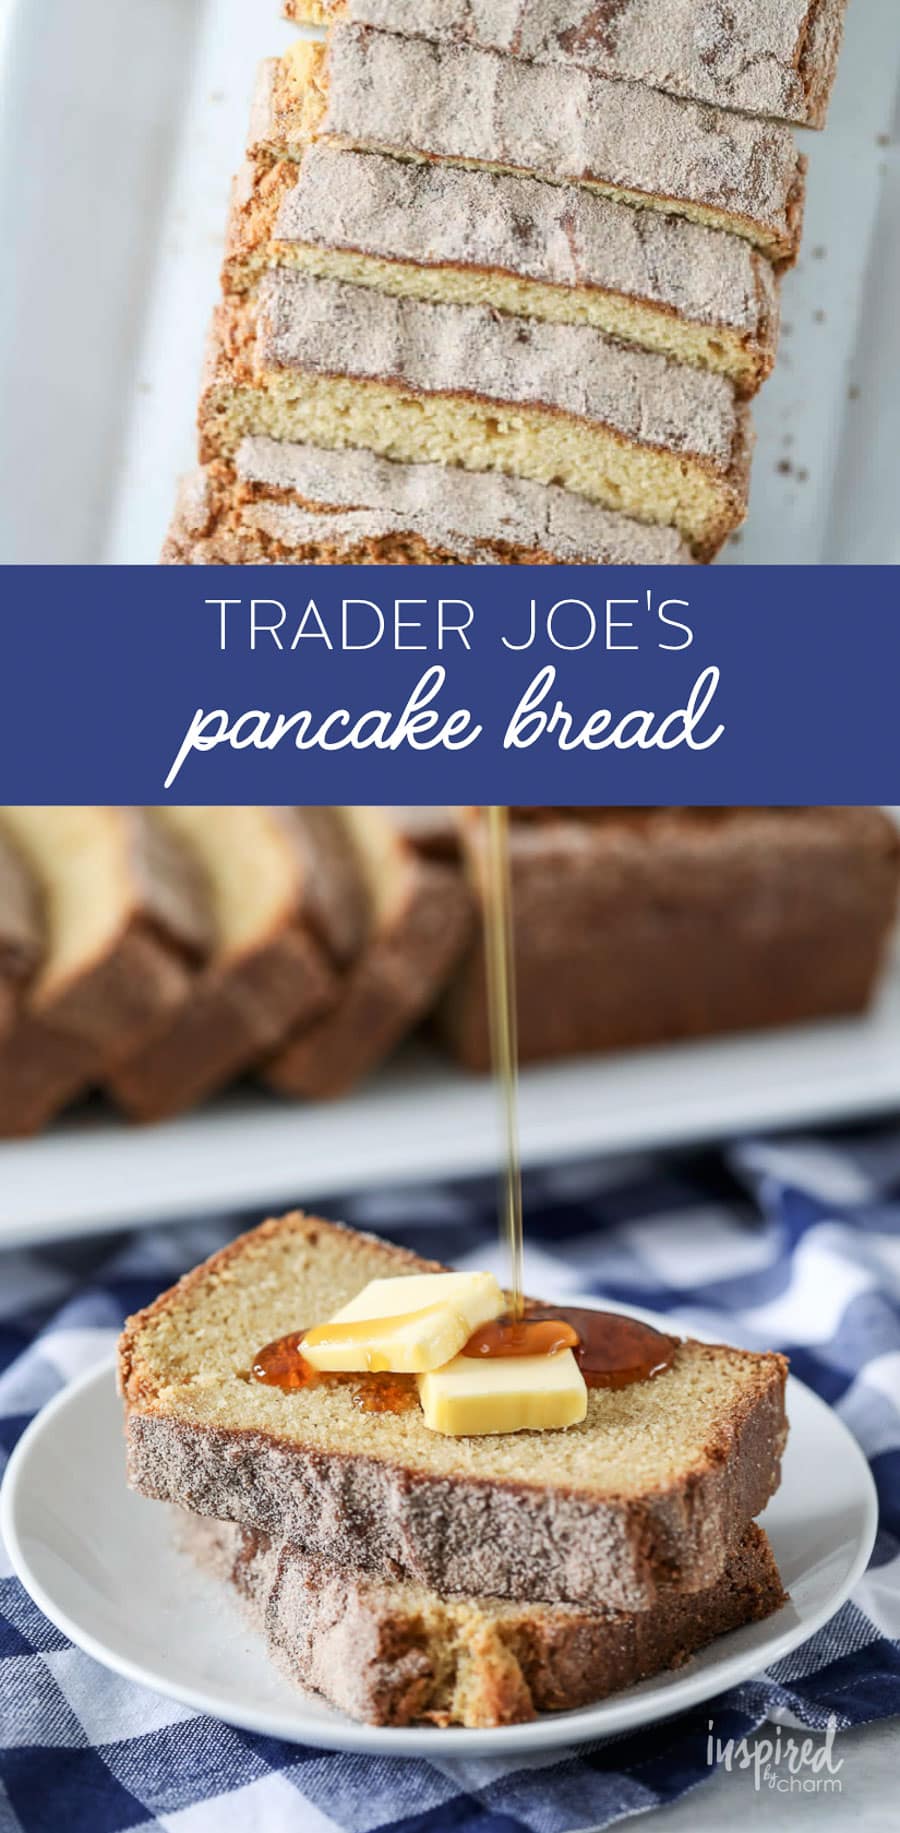 Trader Joe's Pancake Bread Recipe #pancake #bread #quickbread #cinnamon #maple #recipe #traderjoes